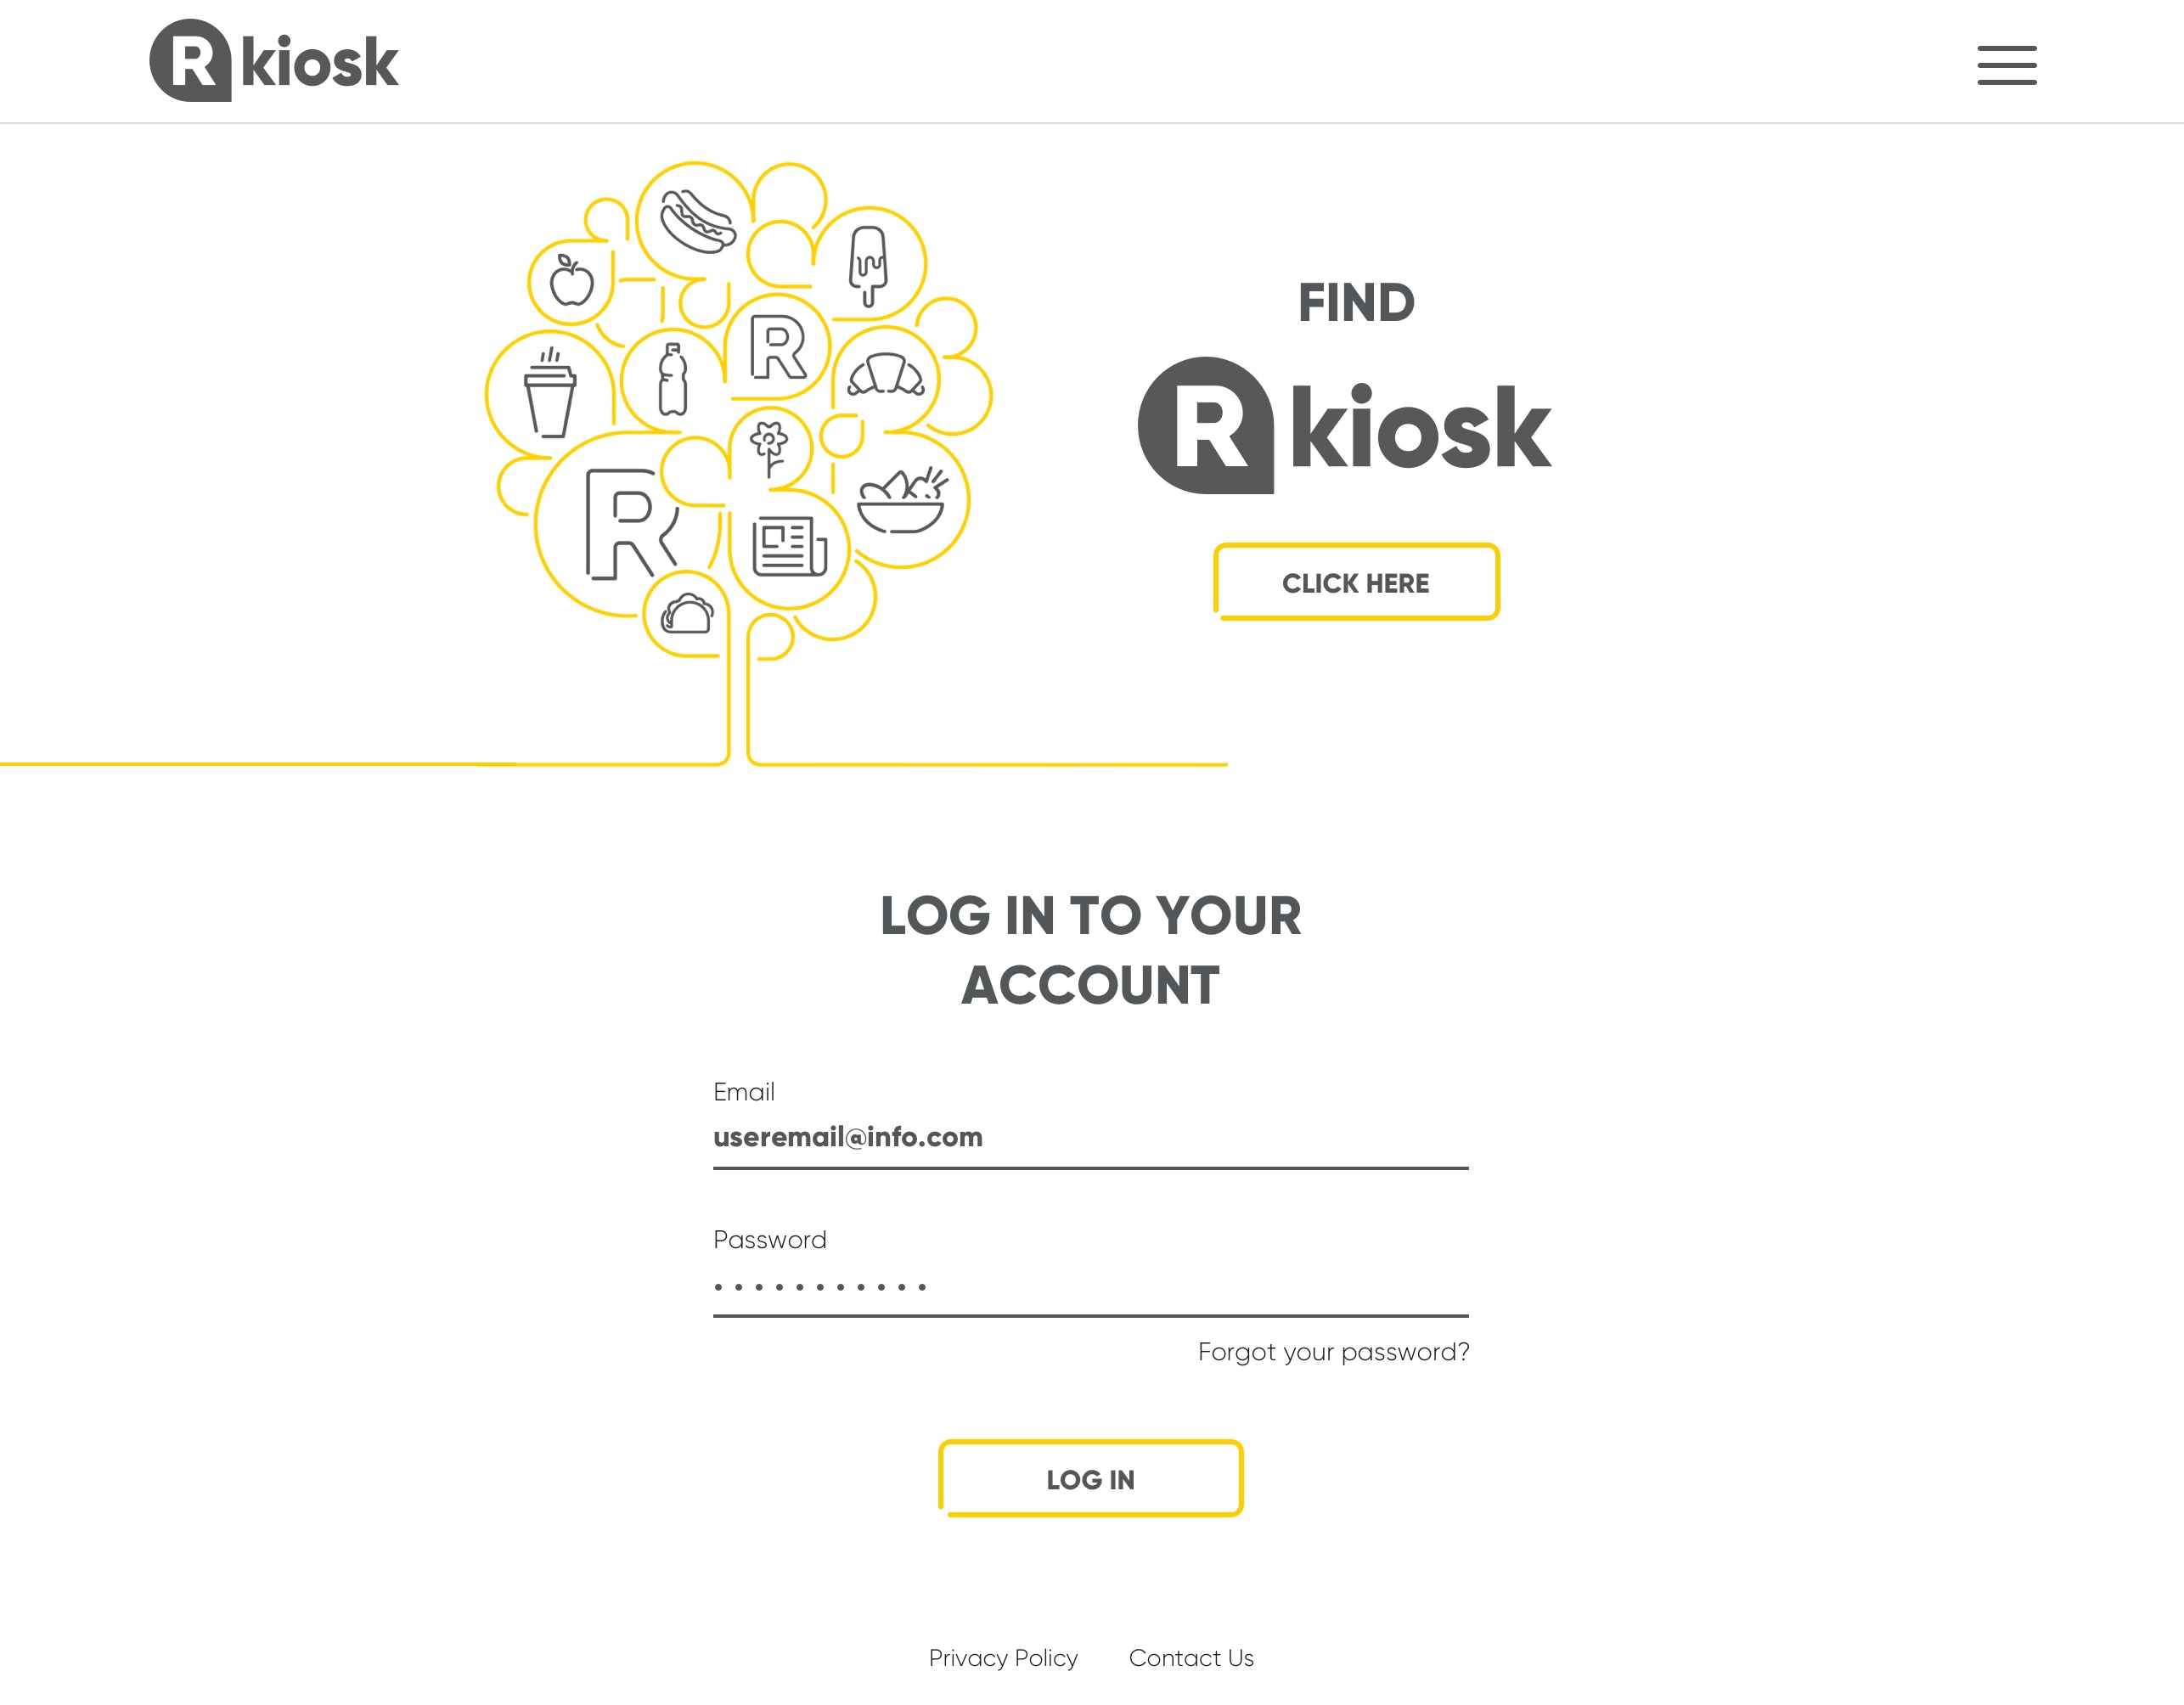 RKIOSKI/B2B platform